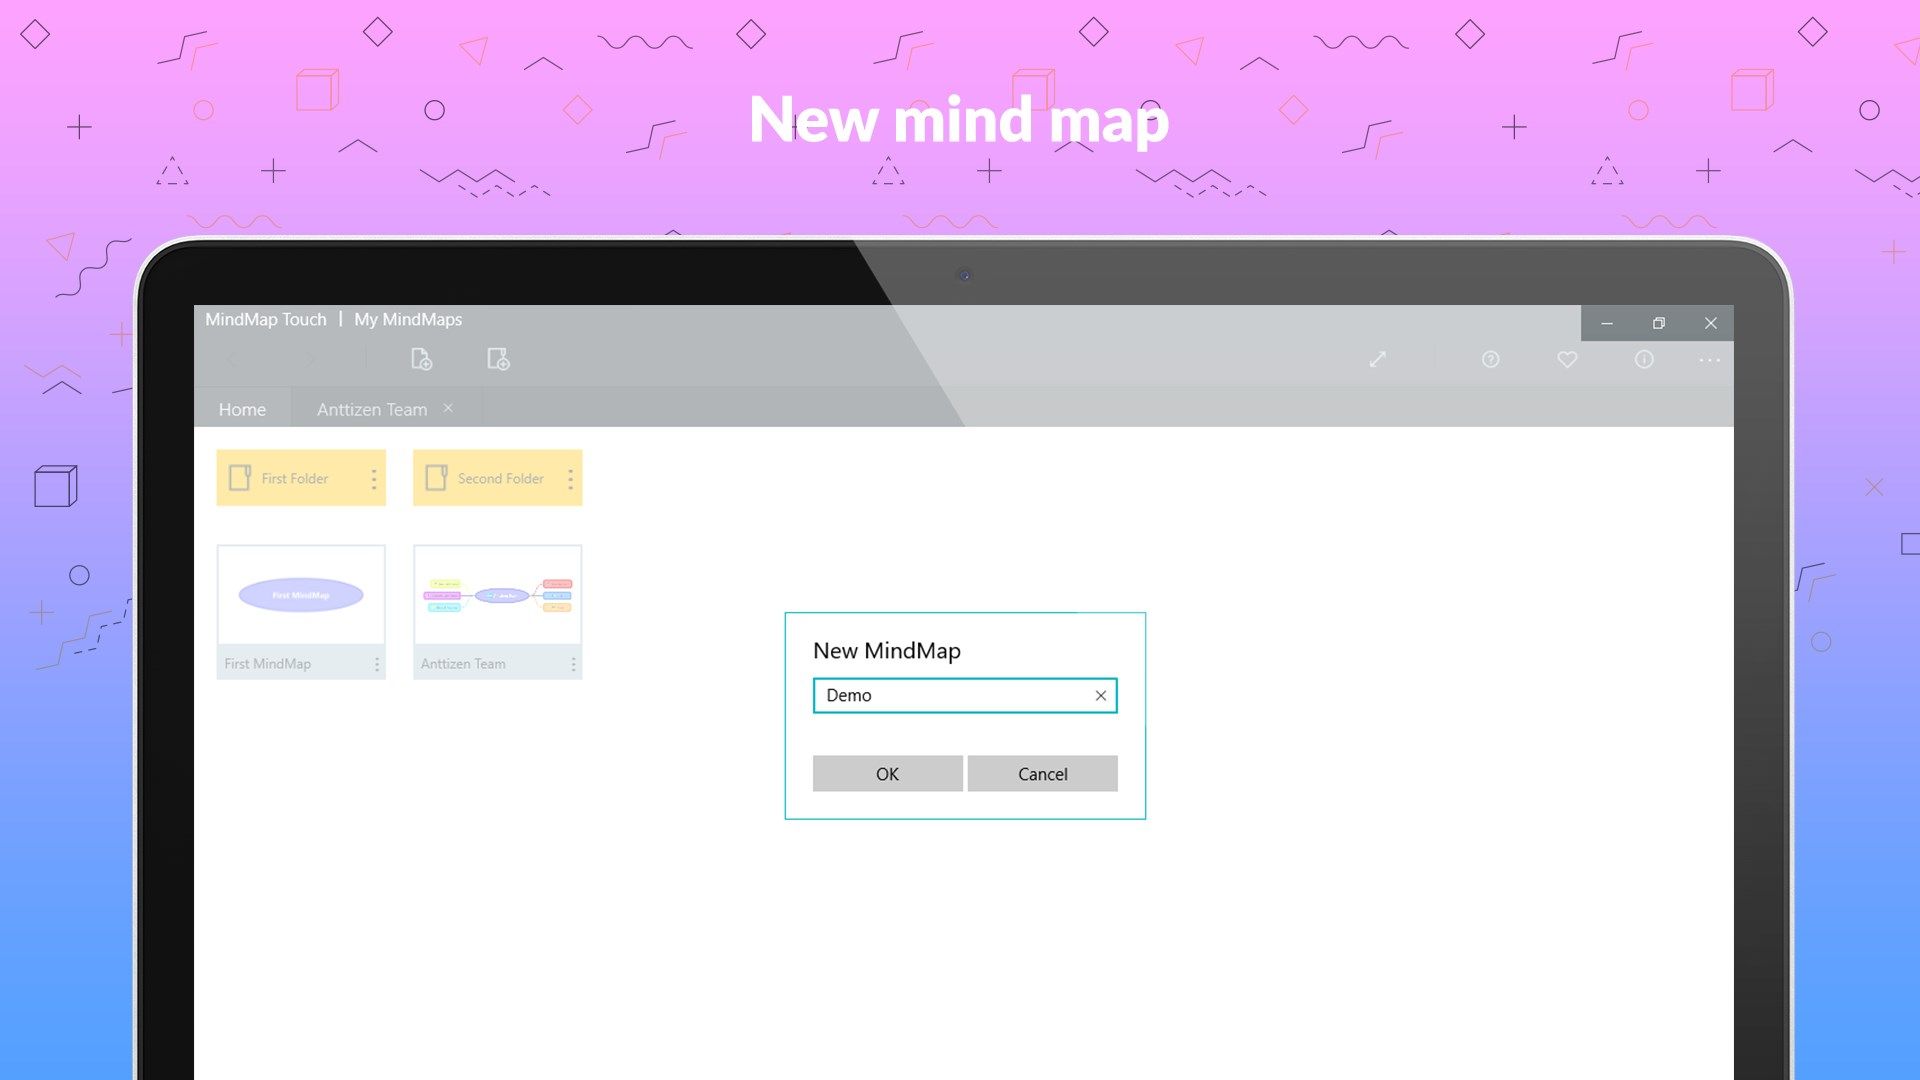 New mind map